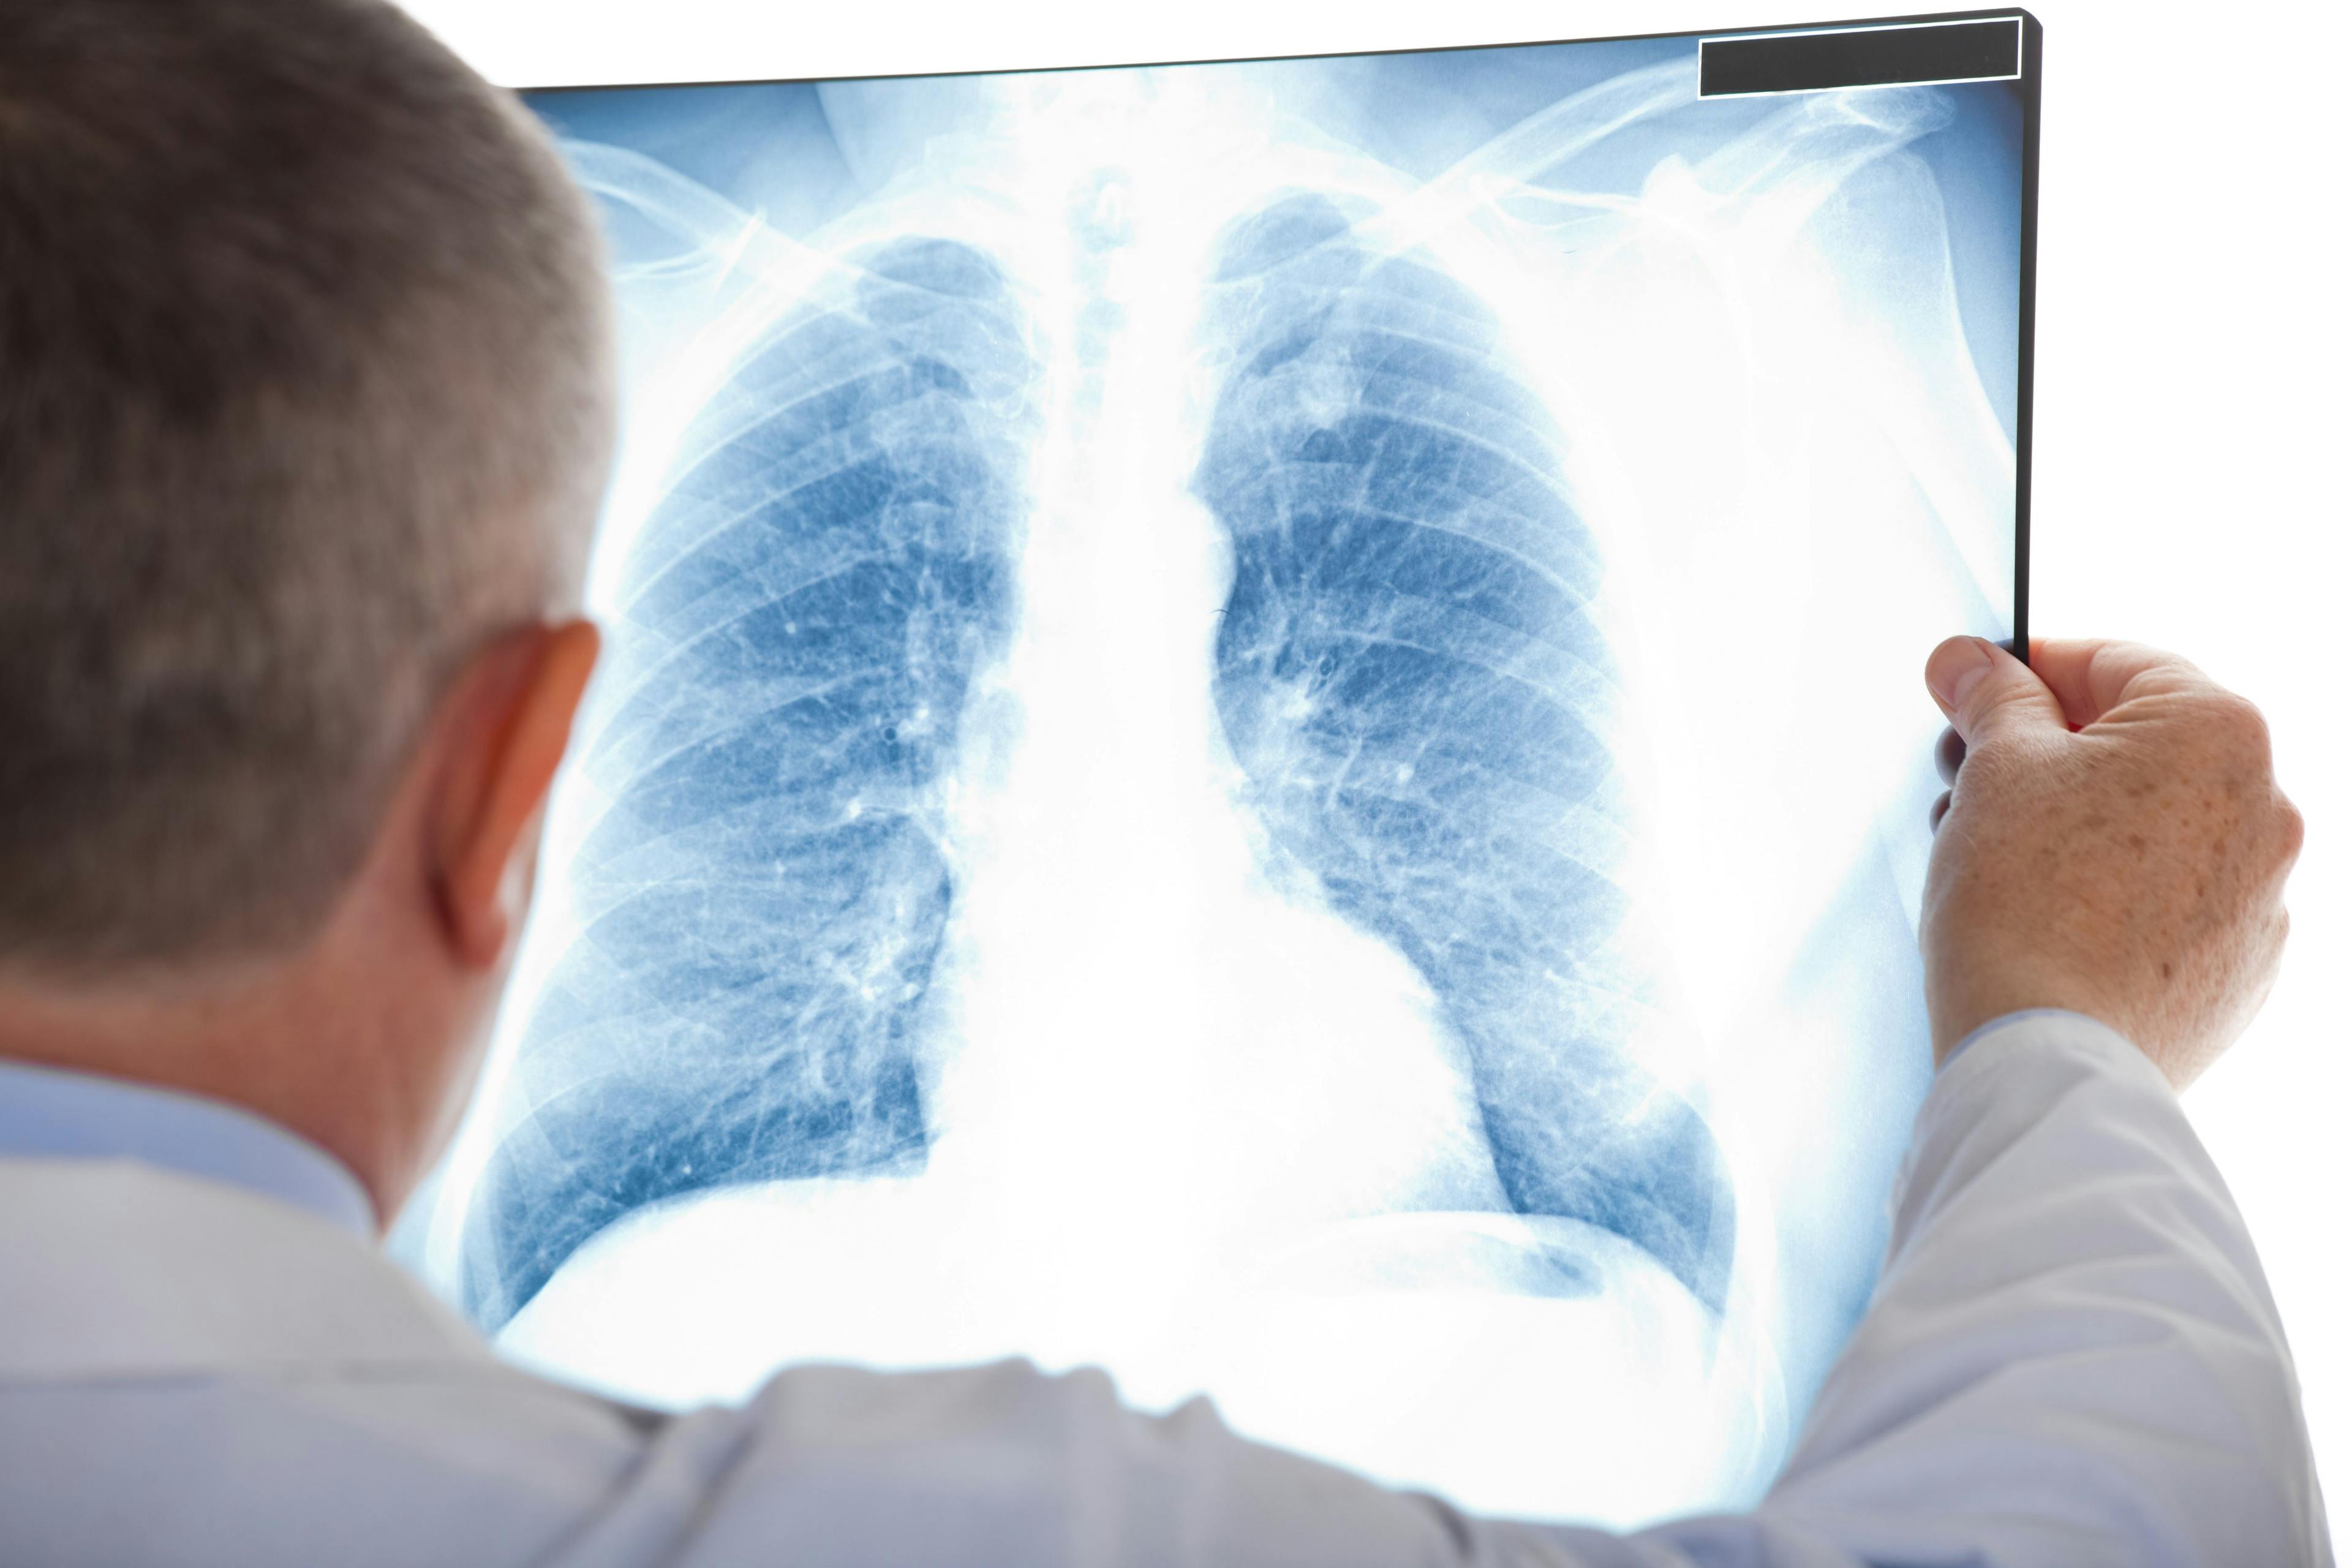 Doctor examining a lung radiography | Image Credit: Minerva Studio - stock.adobe.com